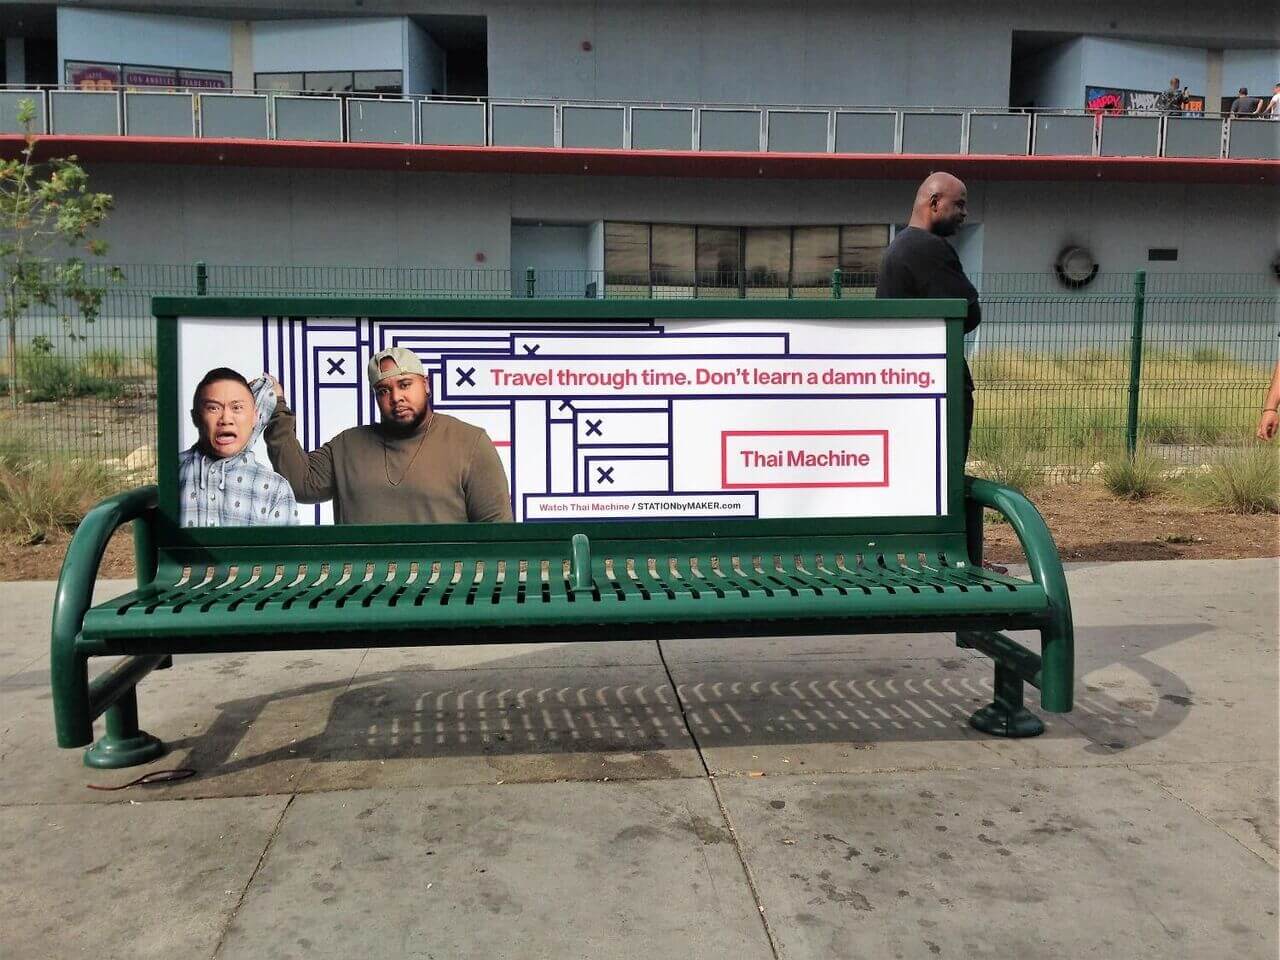 Thai Machine Bus Bench Ad